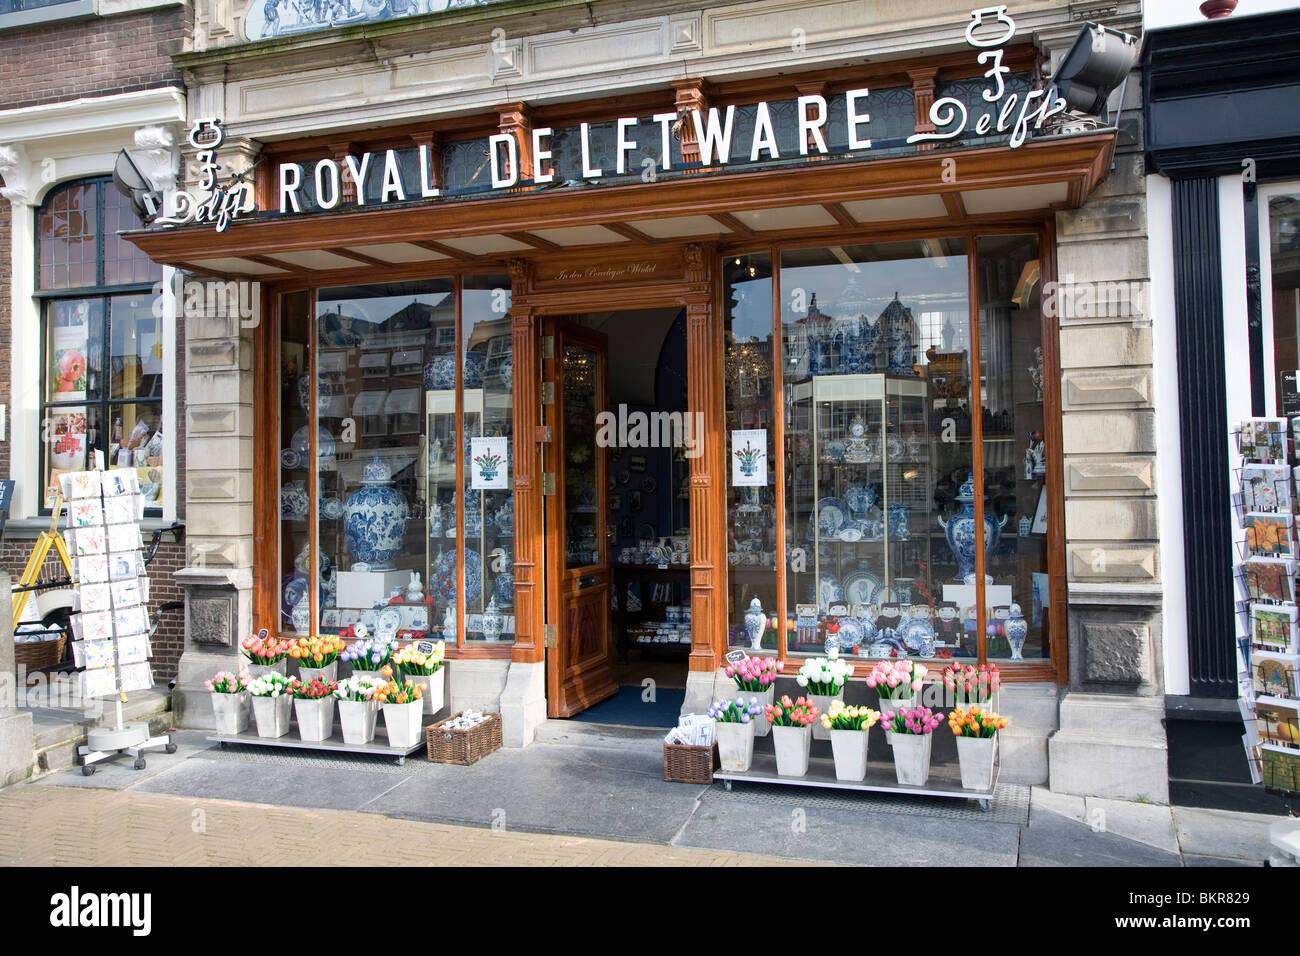 Royal Deftware china shop, Delft, Netherlands Stock Photo